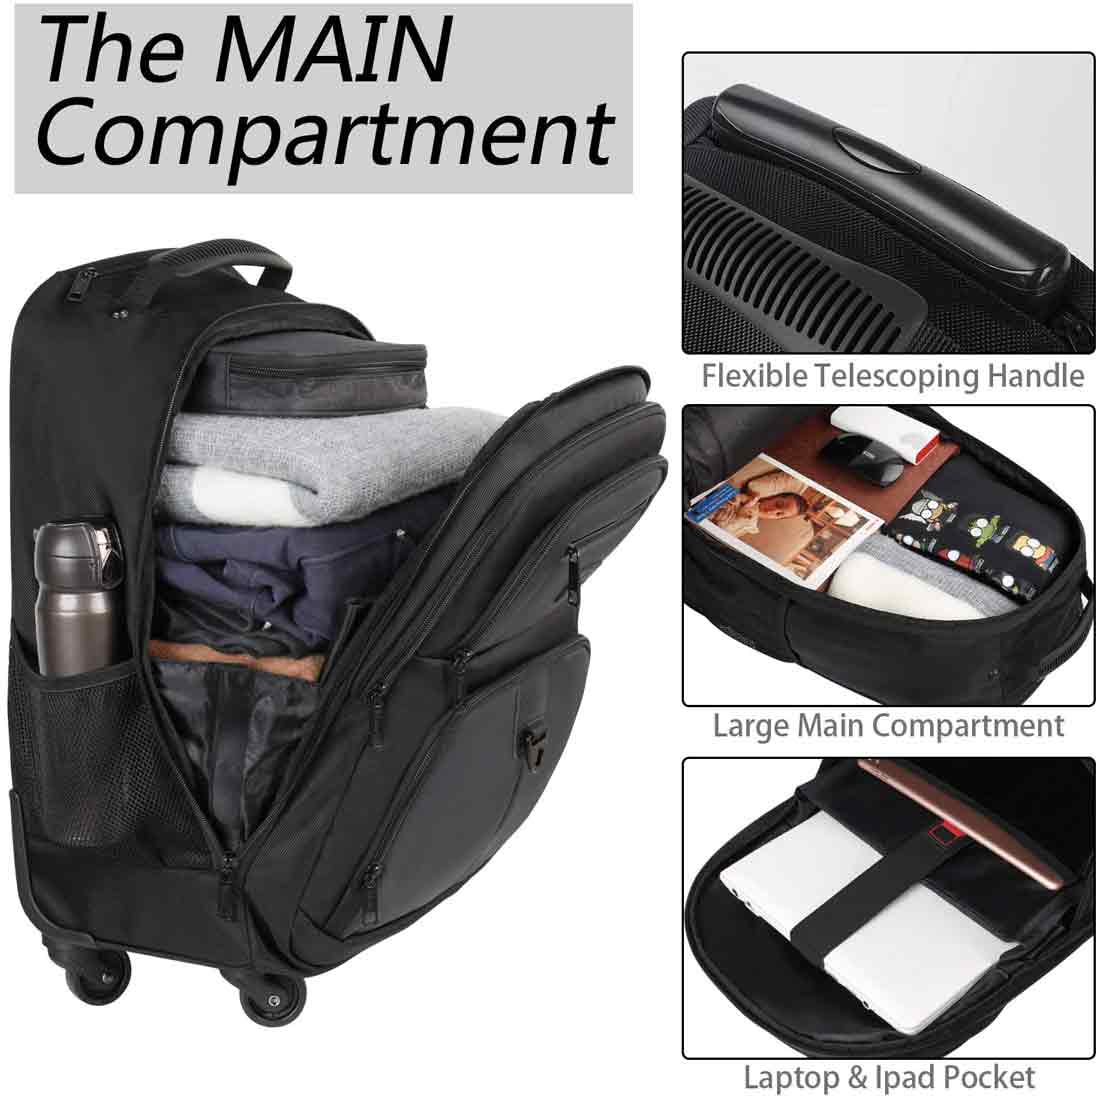 Matein Wheeled Laptop Bag for Women